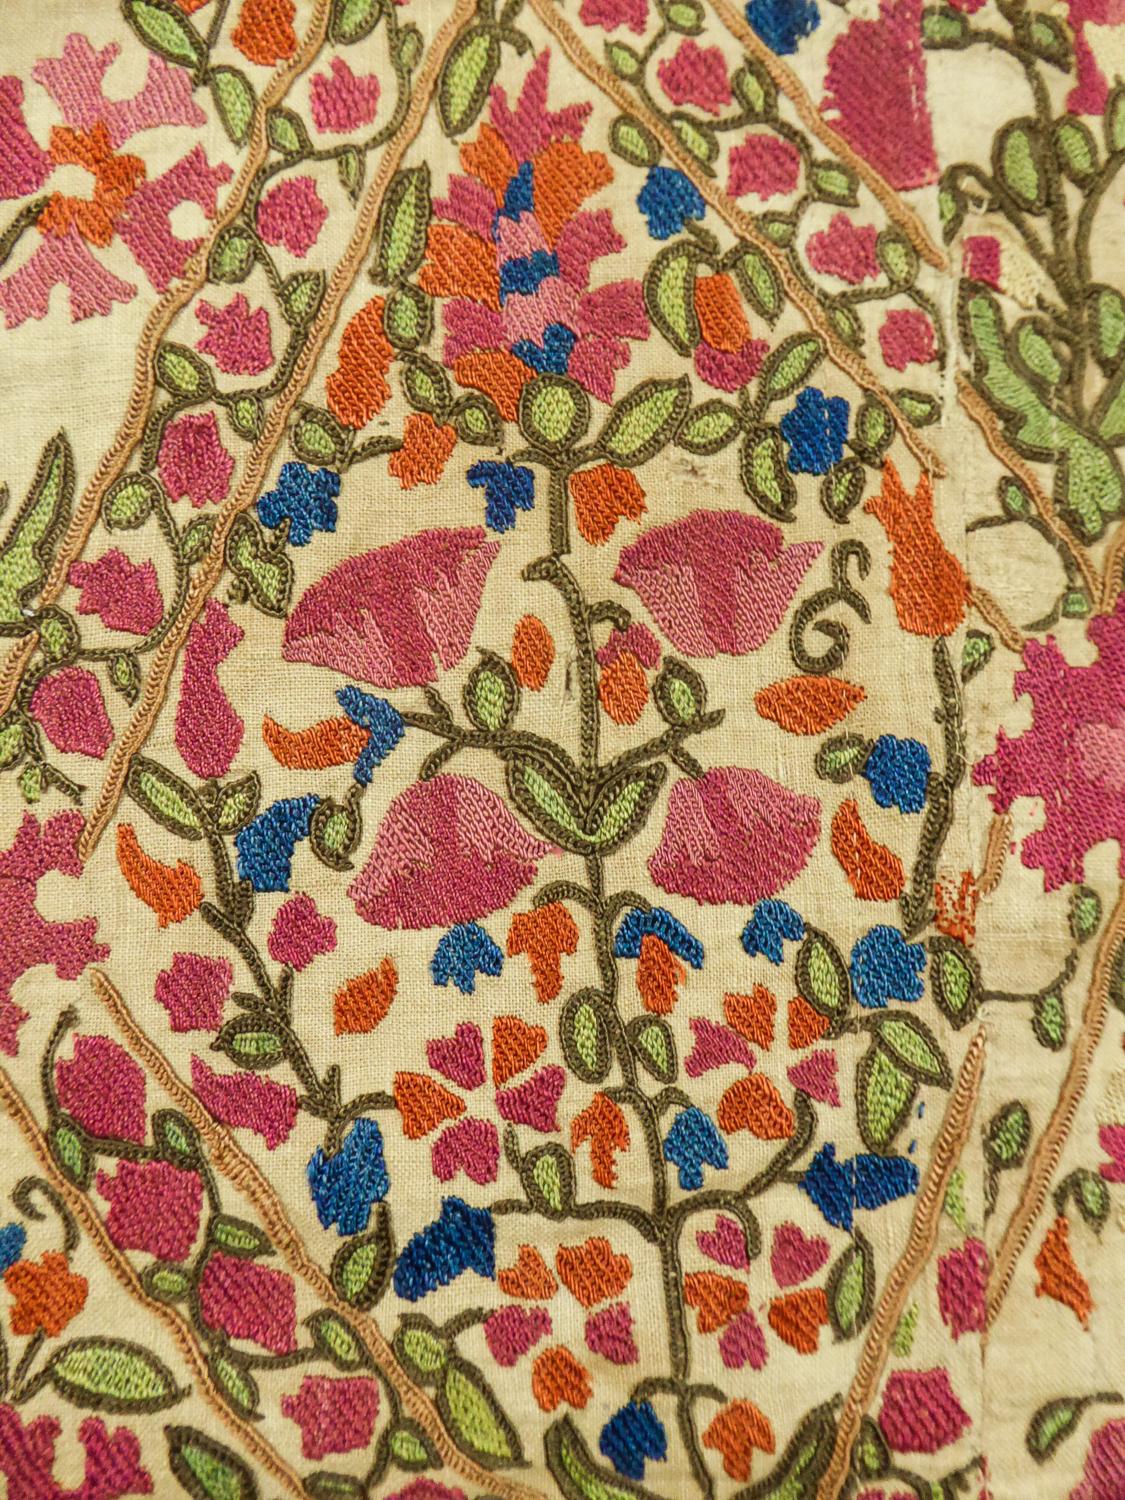 Suzani or Paradise’s Garden Embroidered with Silk - Uzbekistan late 19th Century 1